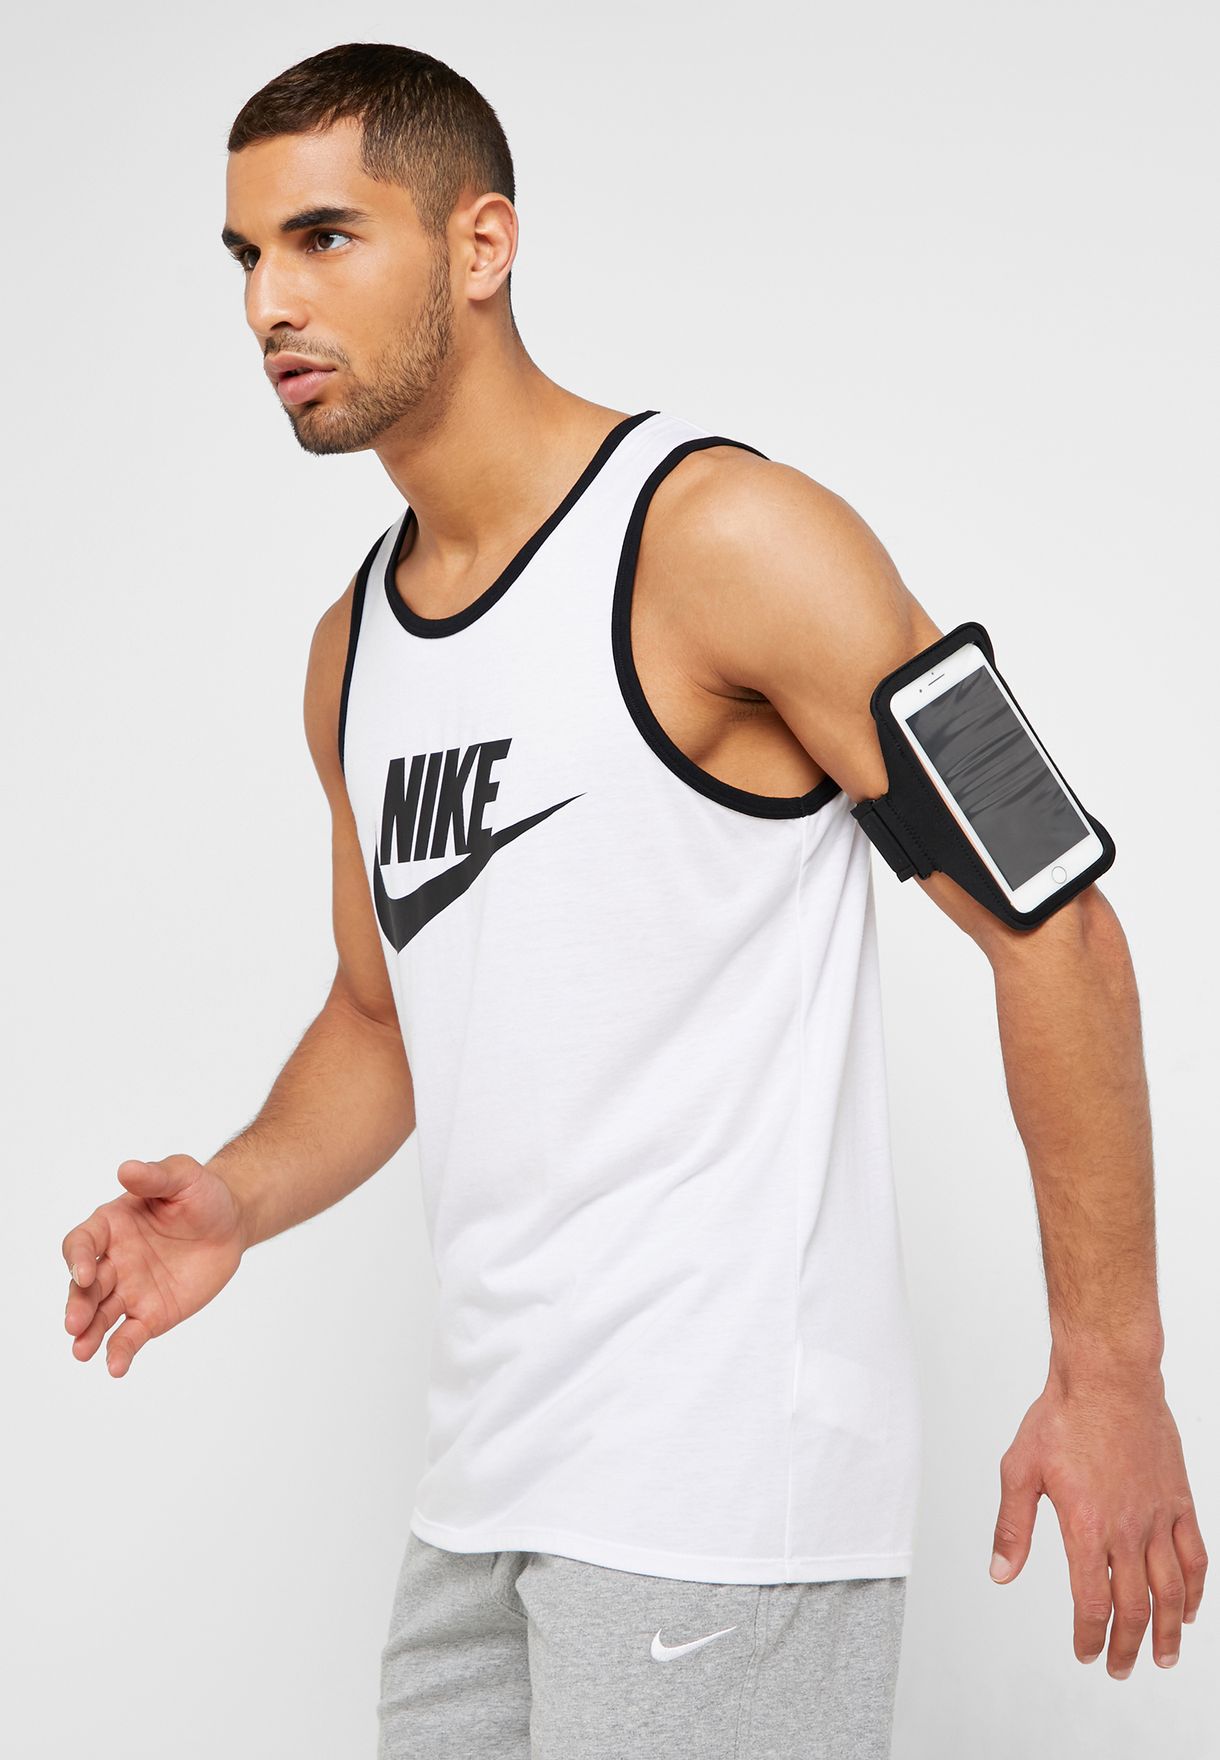 Buy Nike black Lean Arm Band for Kids MENA, Worldwide